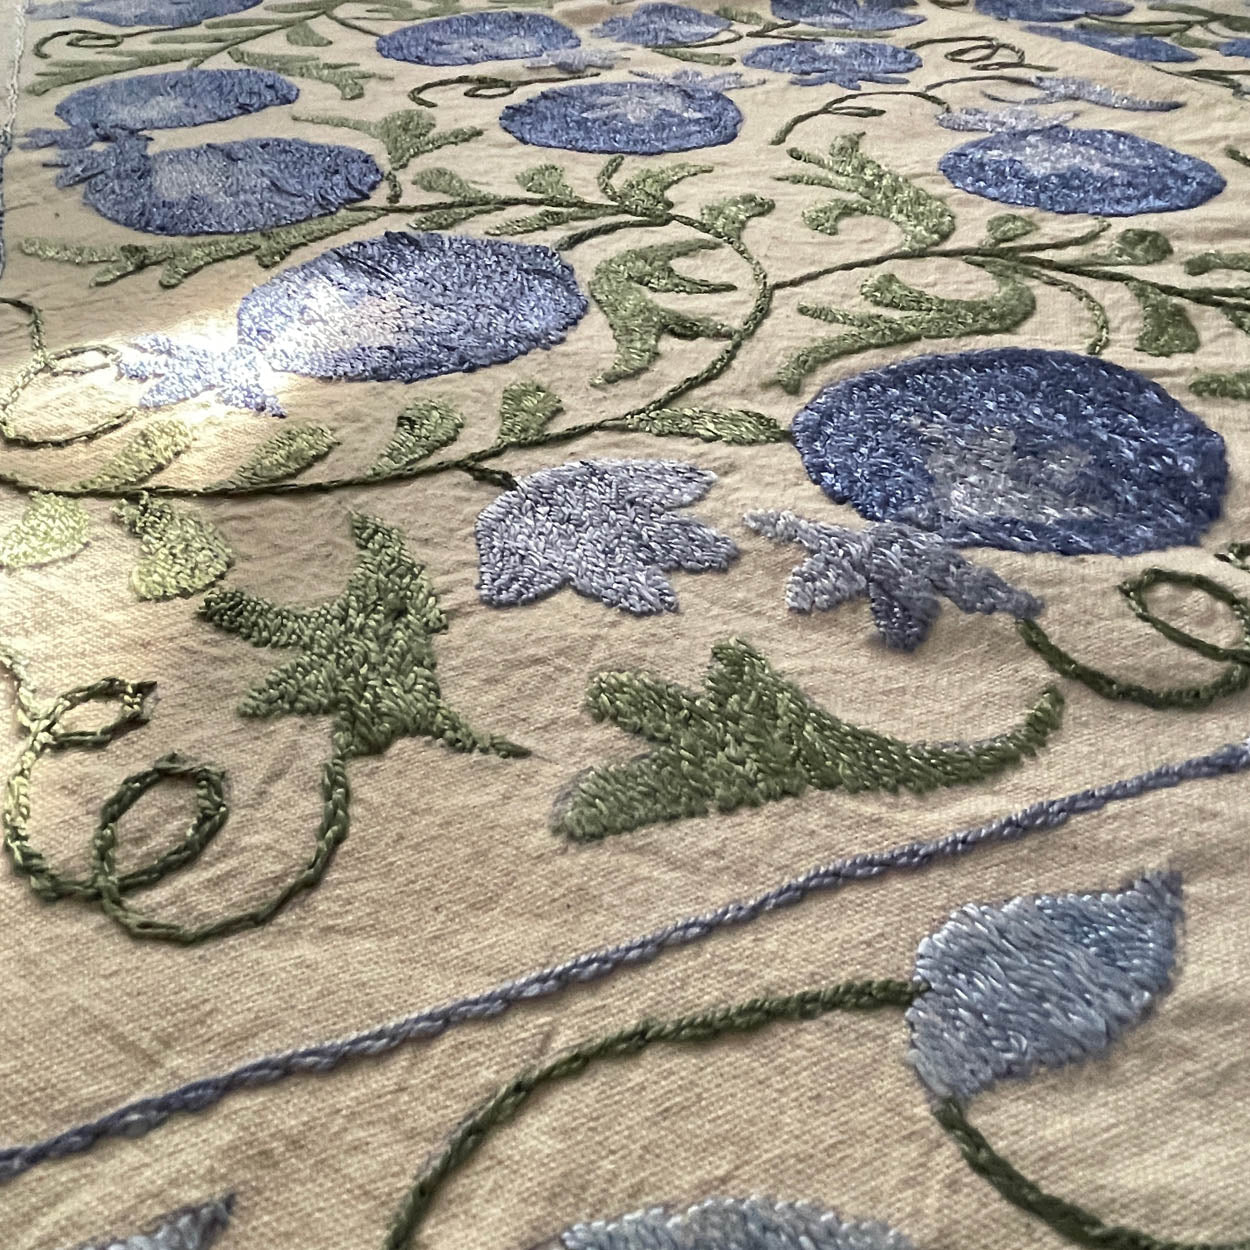 Uzbeki Suzani Hand Embroidered Textile Wall Hanging | Home Décor | Runner | 97cm x 94cm SUZ220518016 - Wildash London